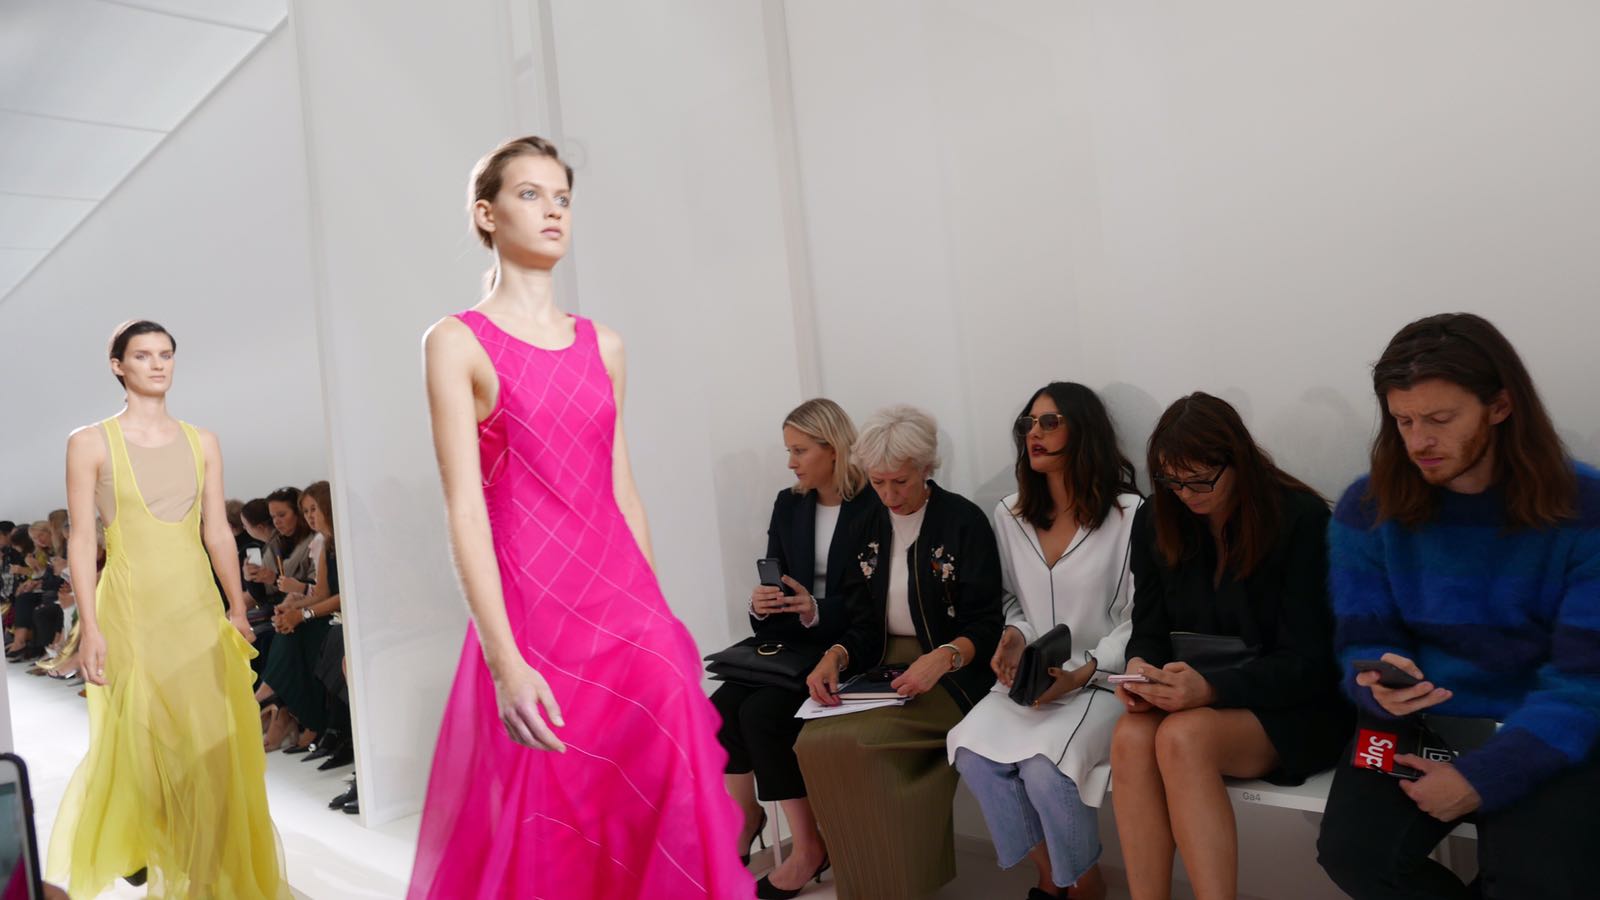 Hermès SS17 collection at Paris Fashion Week Photos: Vivian Chen